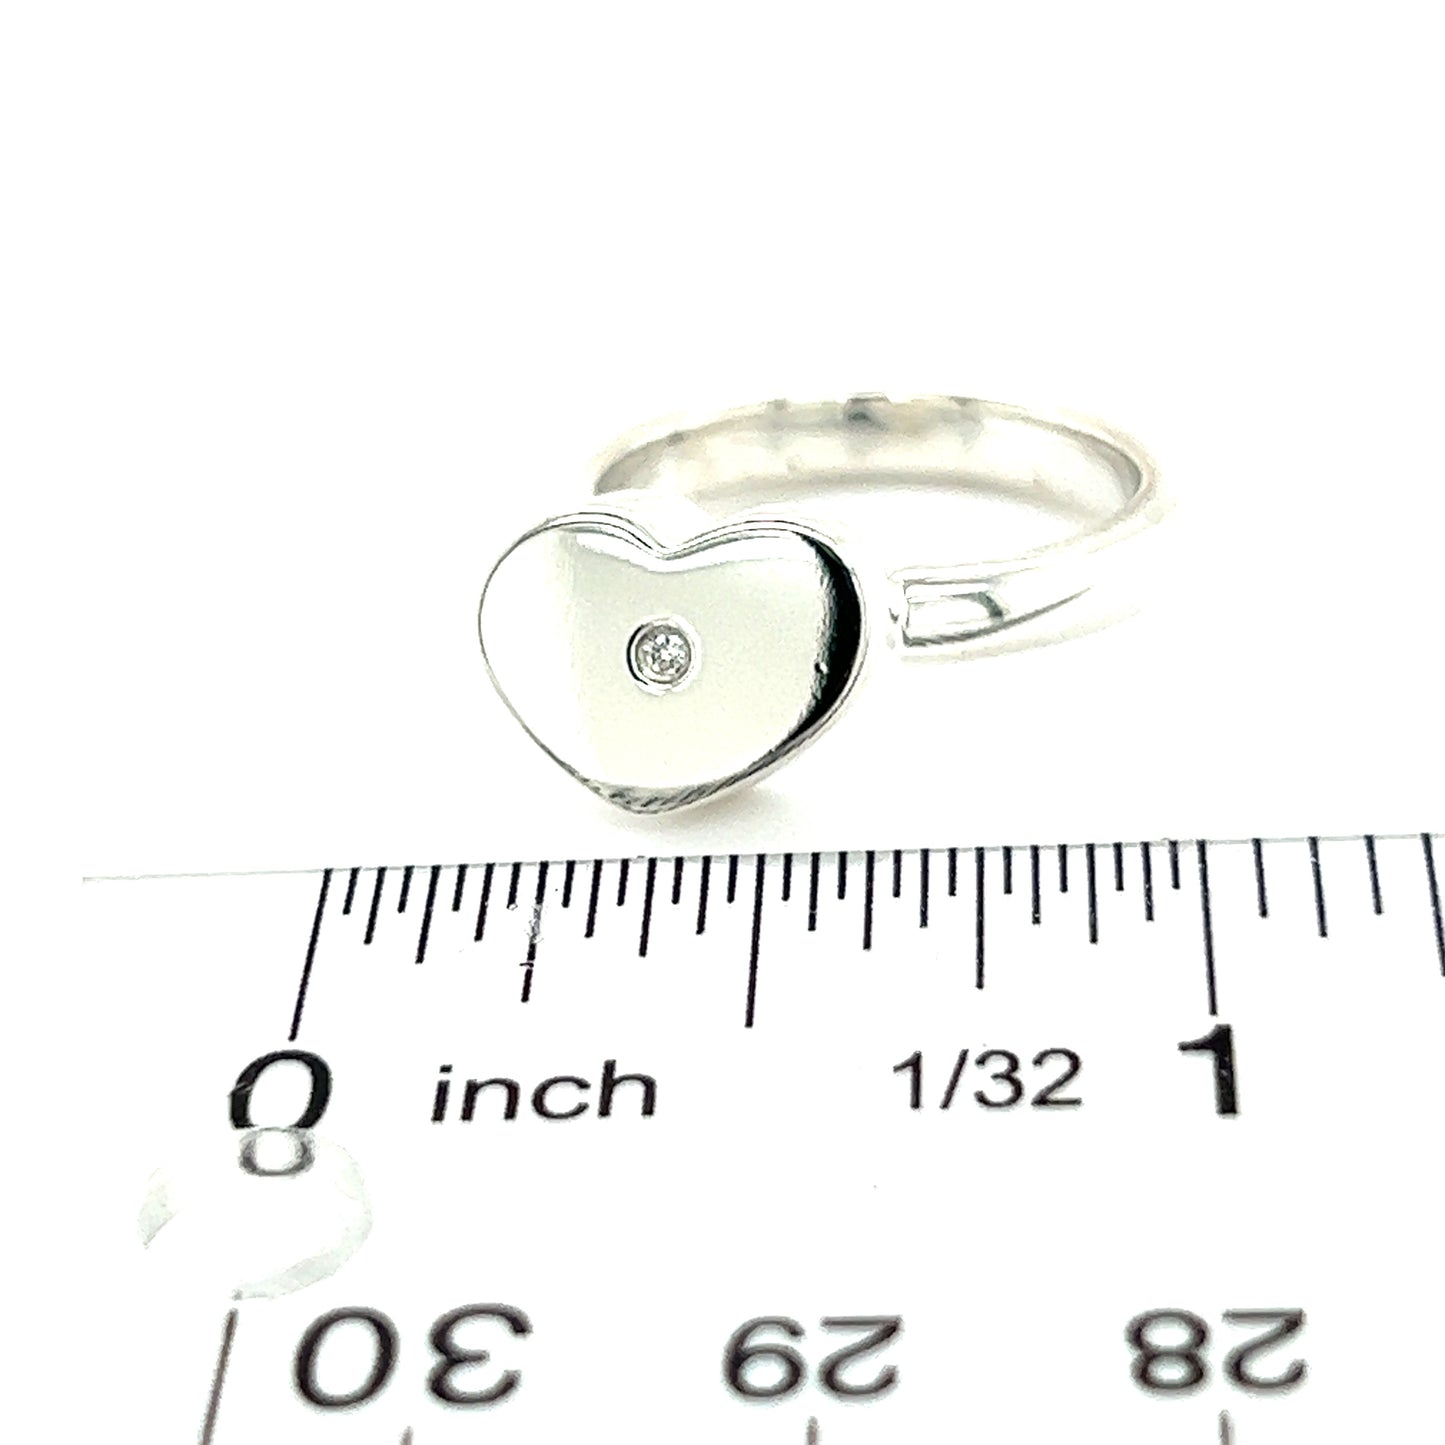 Tiffany & Co Authentic Estate Heart Diamond Ring Size 6.5 Silver TIF396